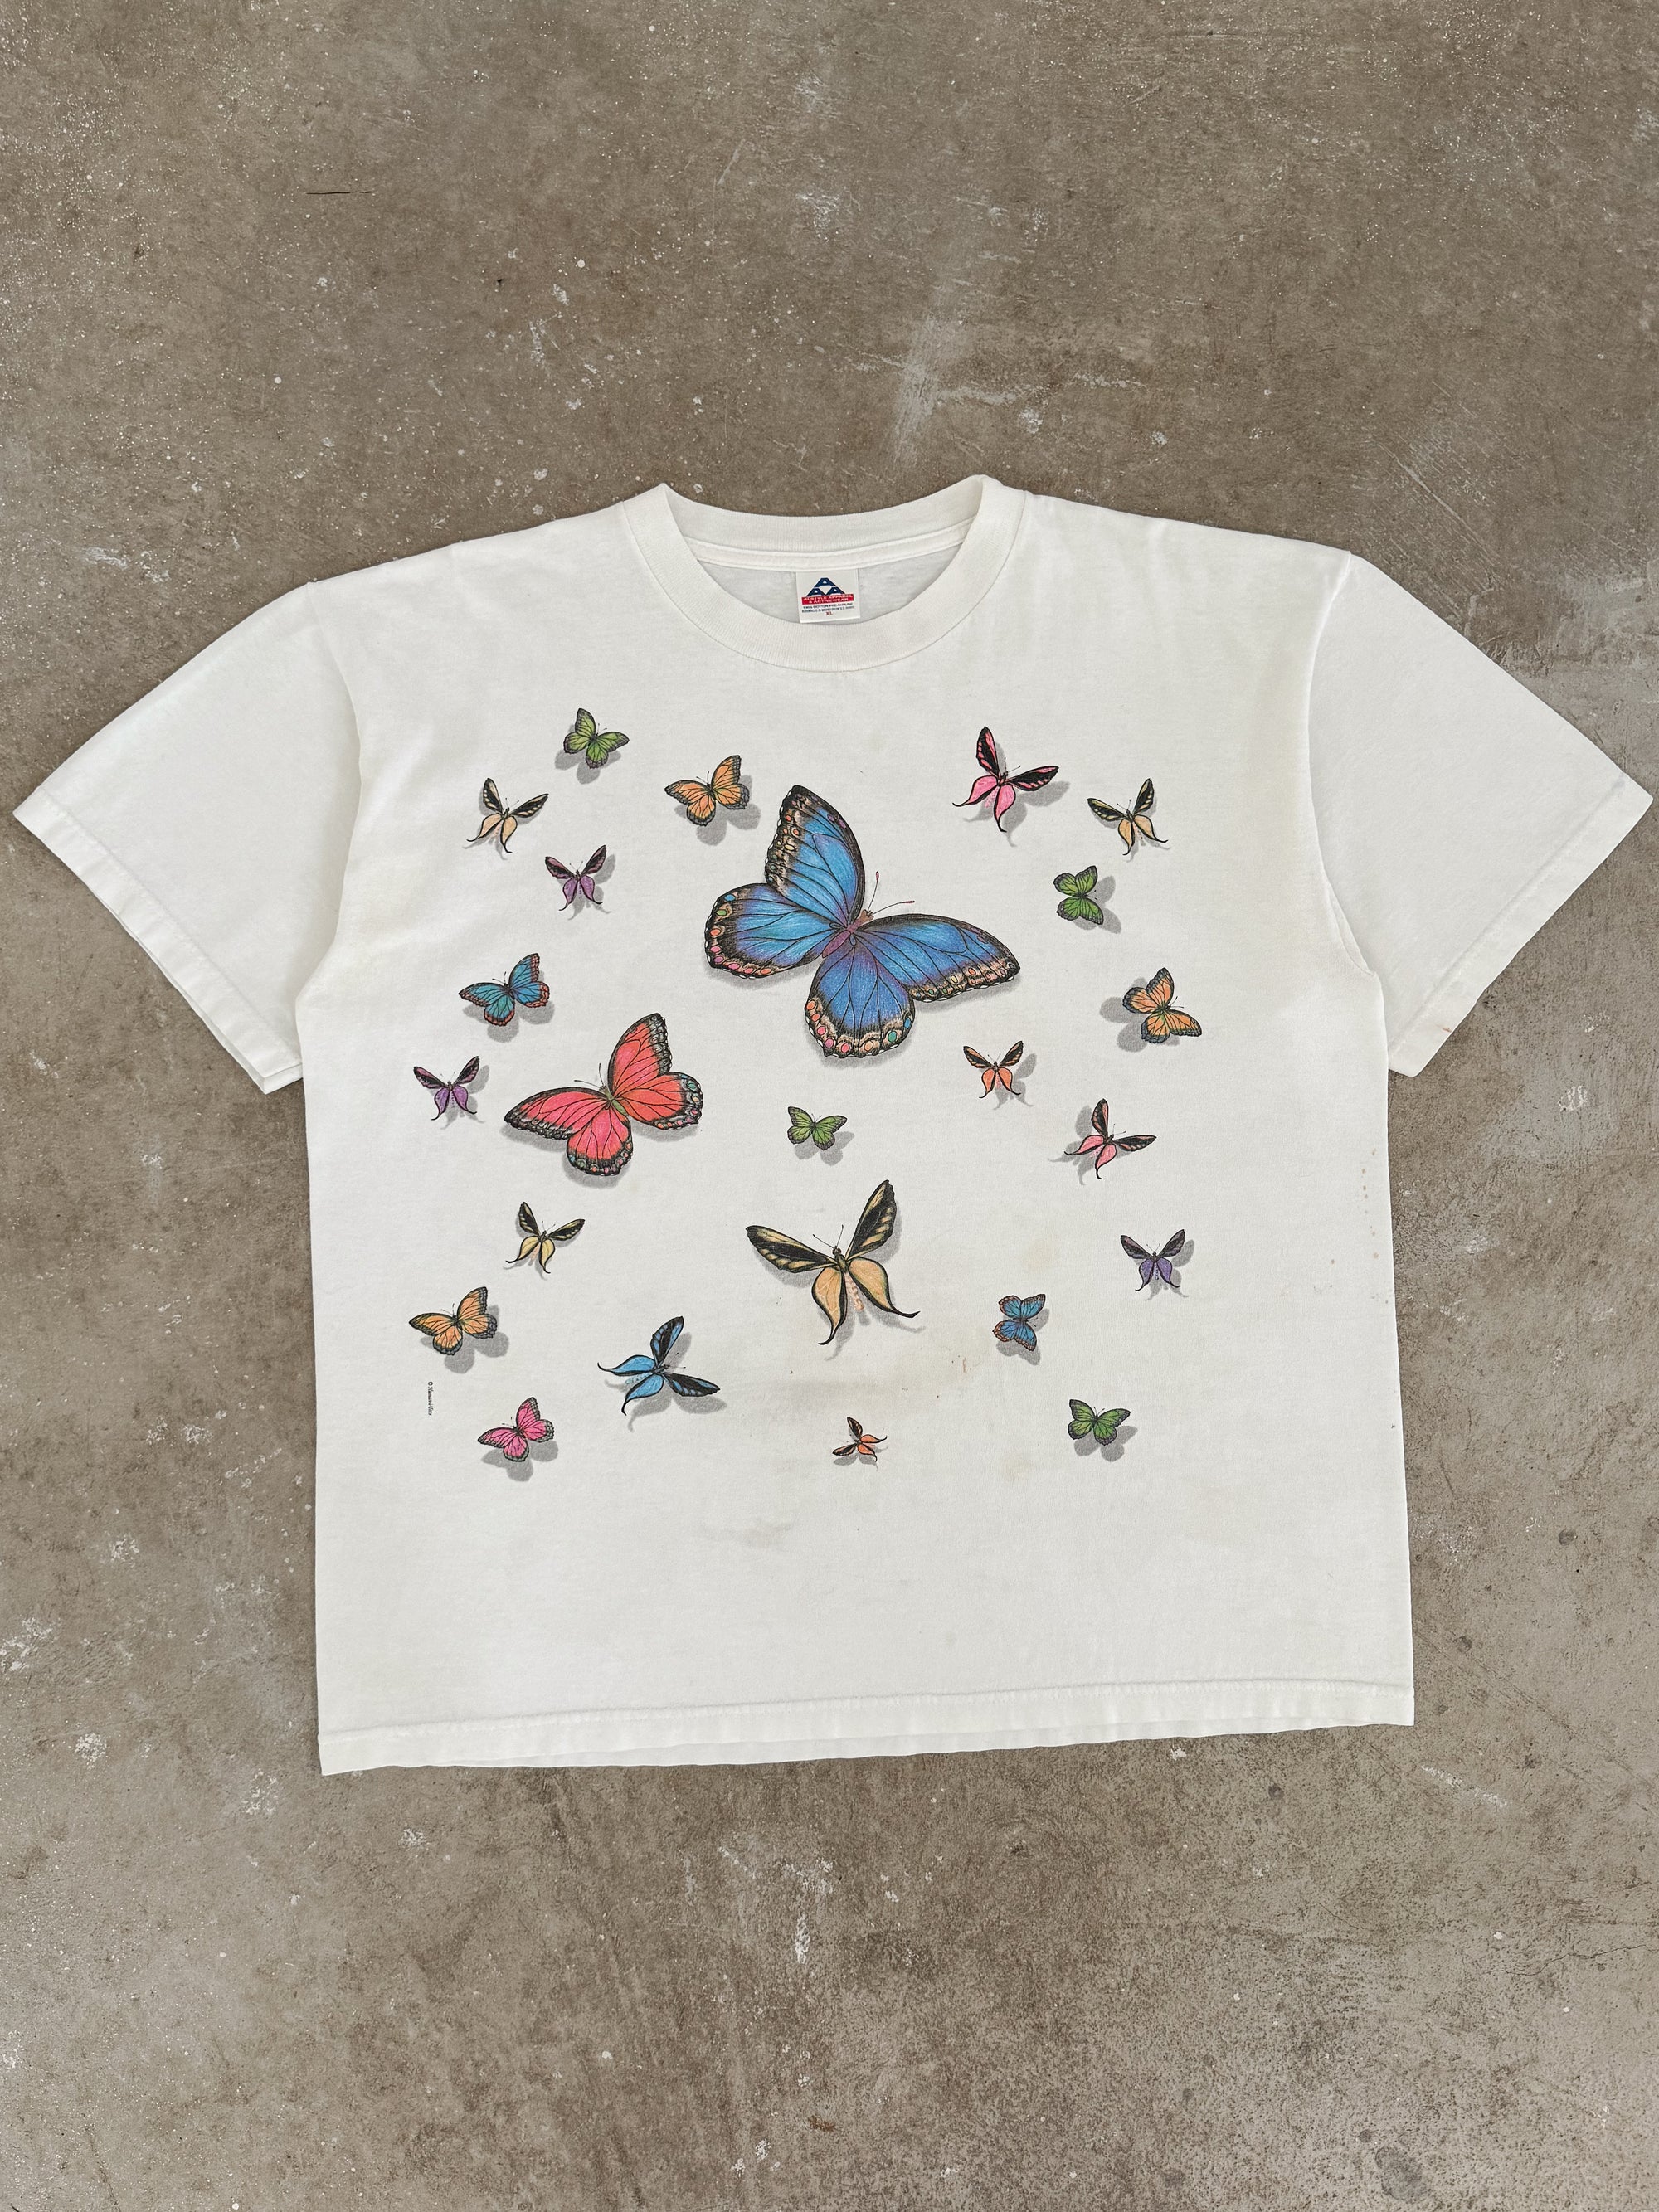 1990s "Butterfly" Tee (XL)